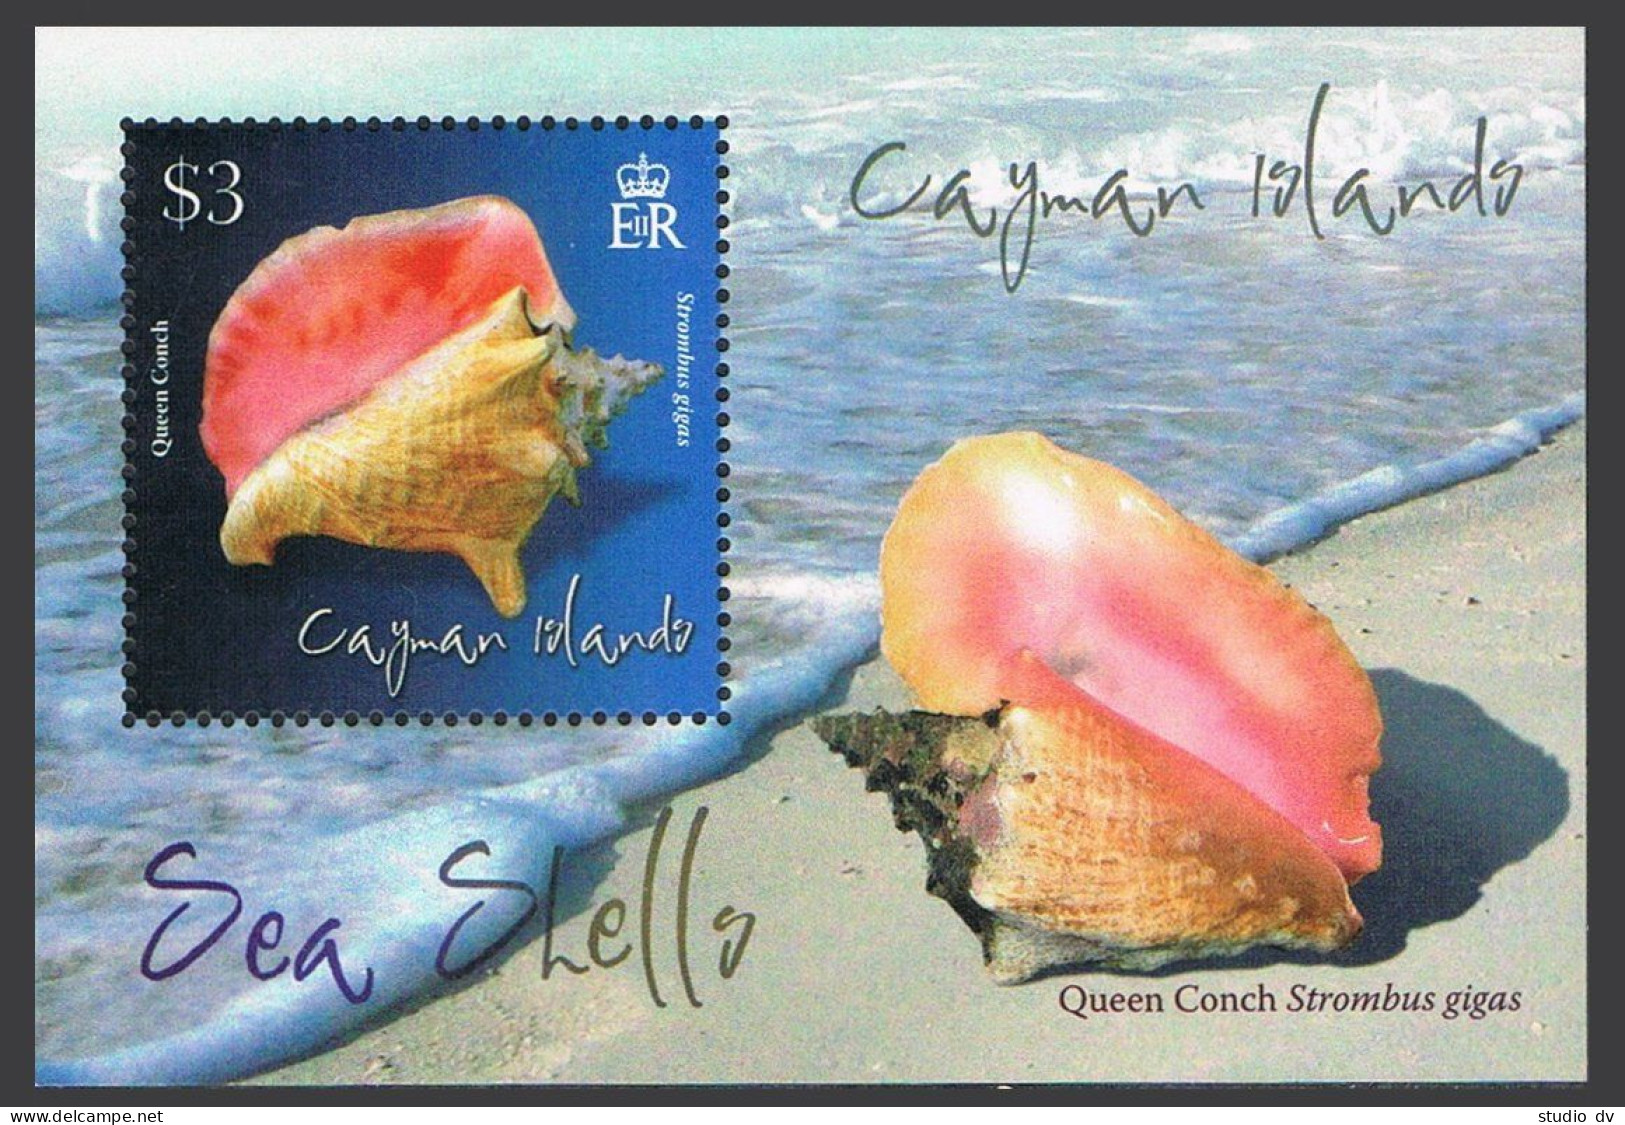 Cayman 1058-1063,1064,MNH. Shells 2010. Hawk-wing Conch,Ornate Scallop,Chestnut, - Cayman Islands